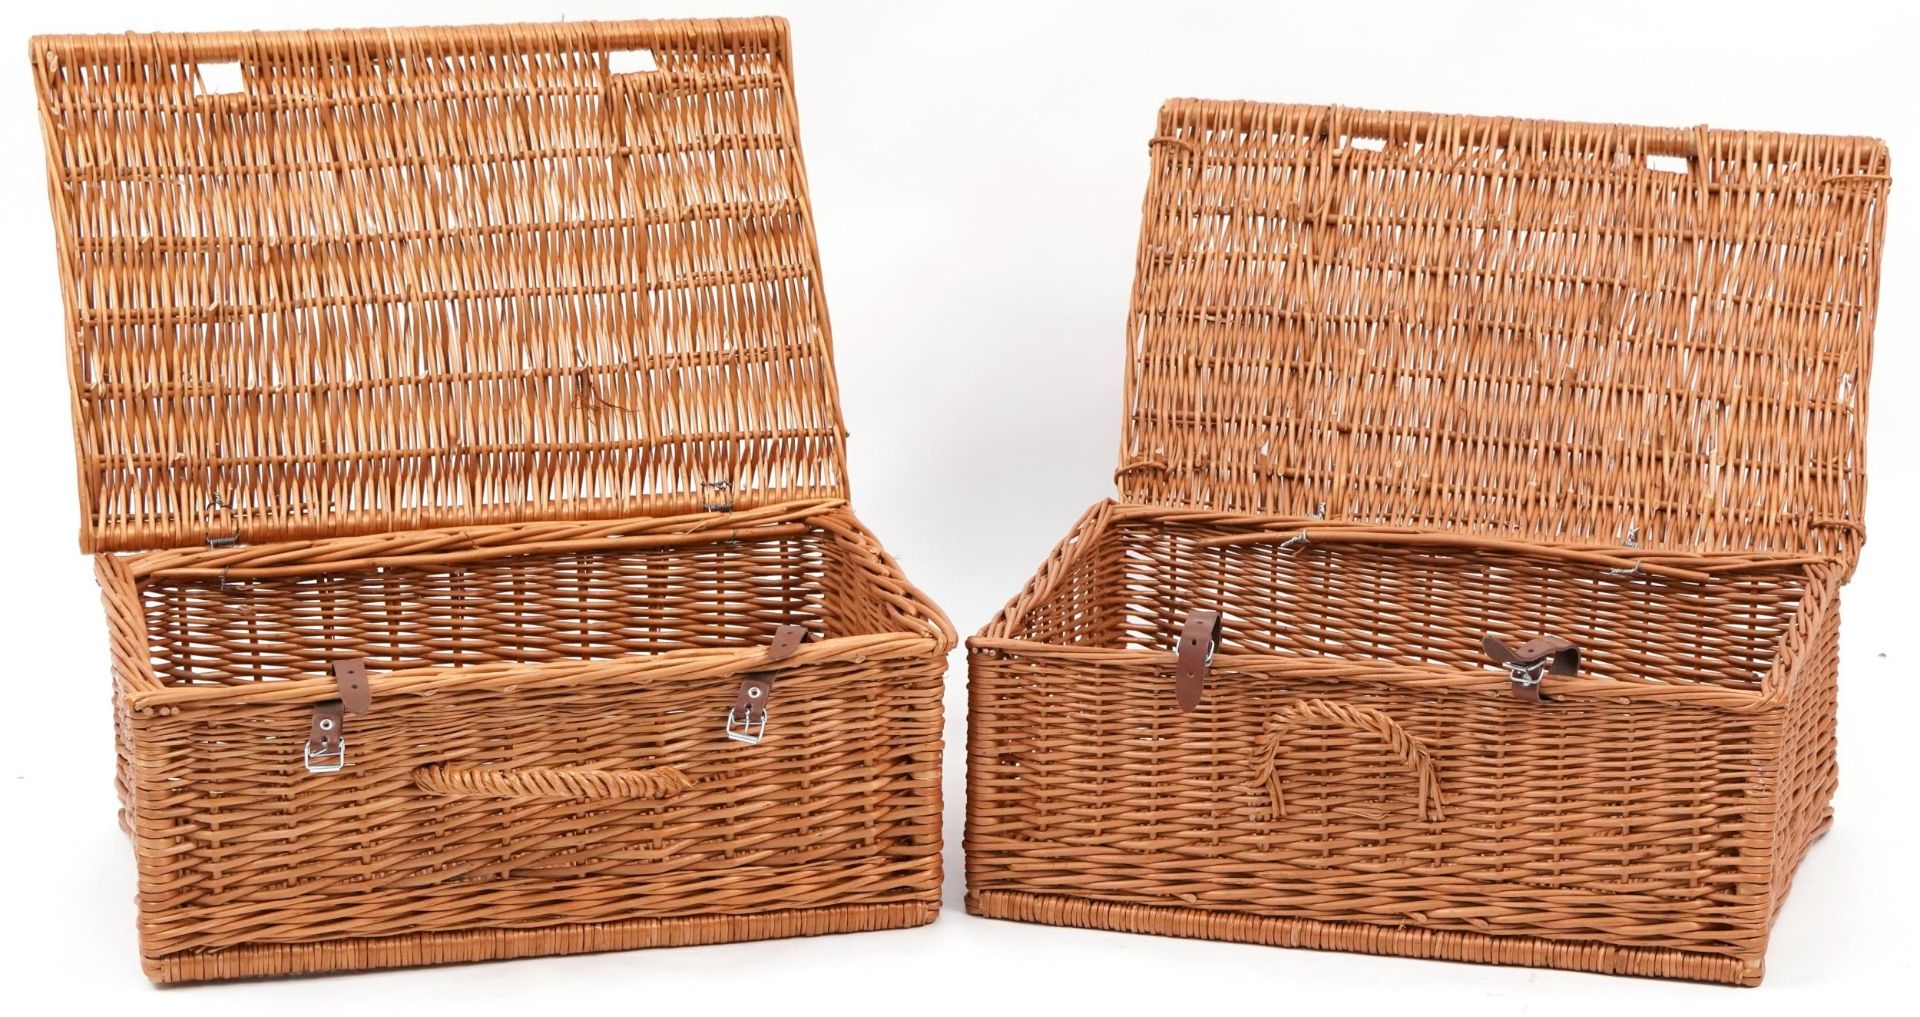 Two wicker picnic hampers, 23cm H x 57cm W x 38cm D - Image 2 of 3